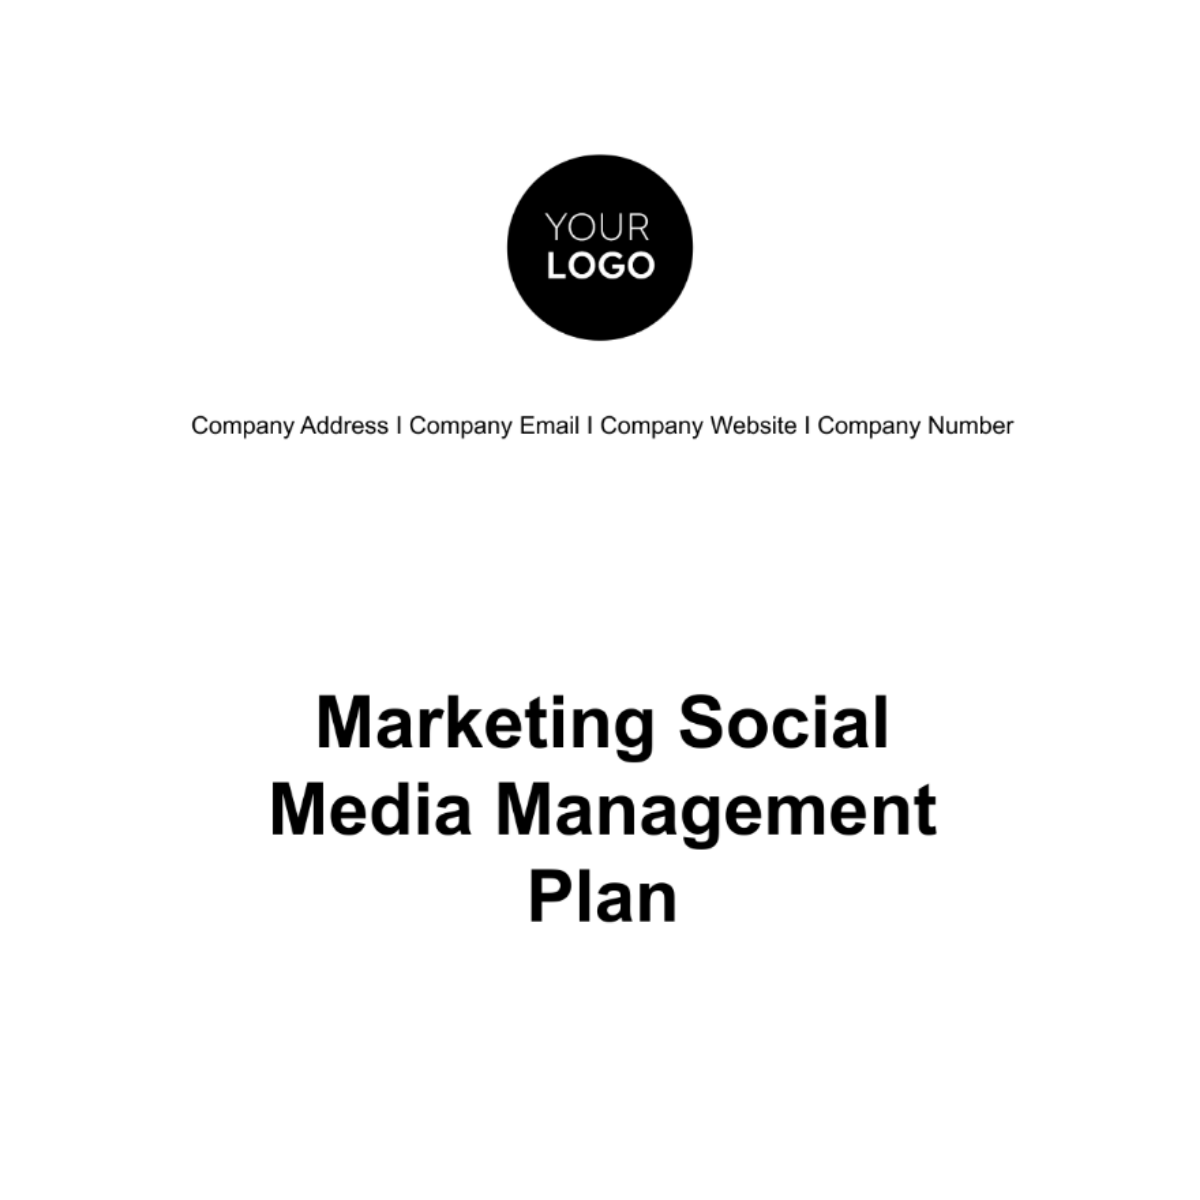 Marketing Social Media Management Plan Template